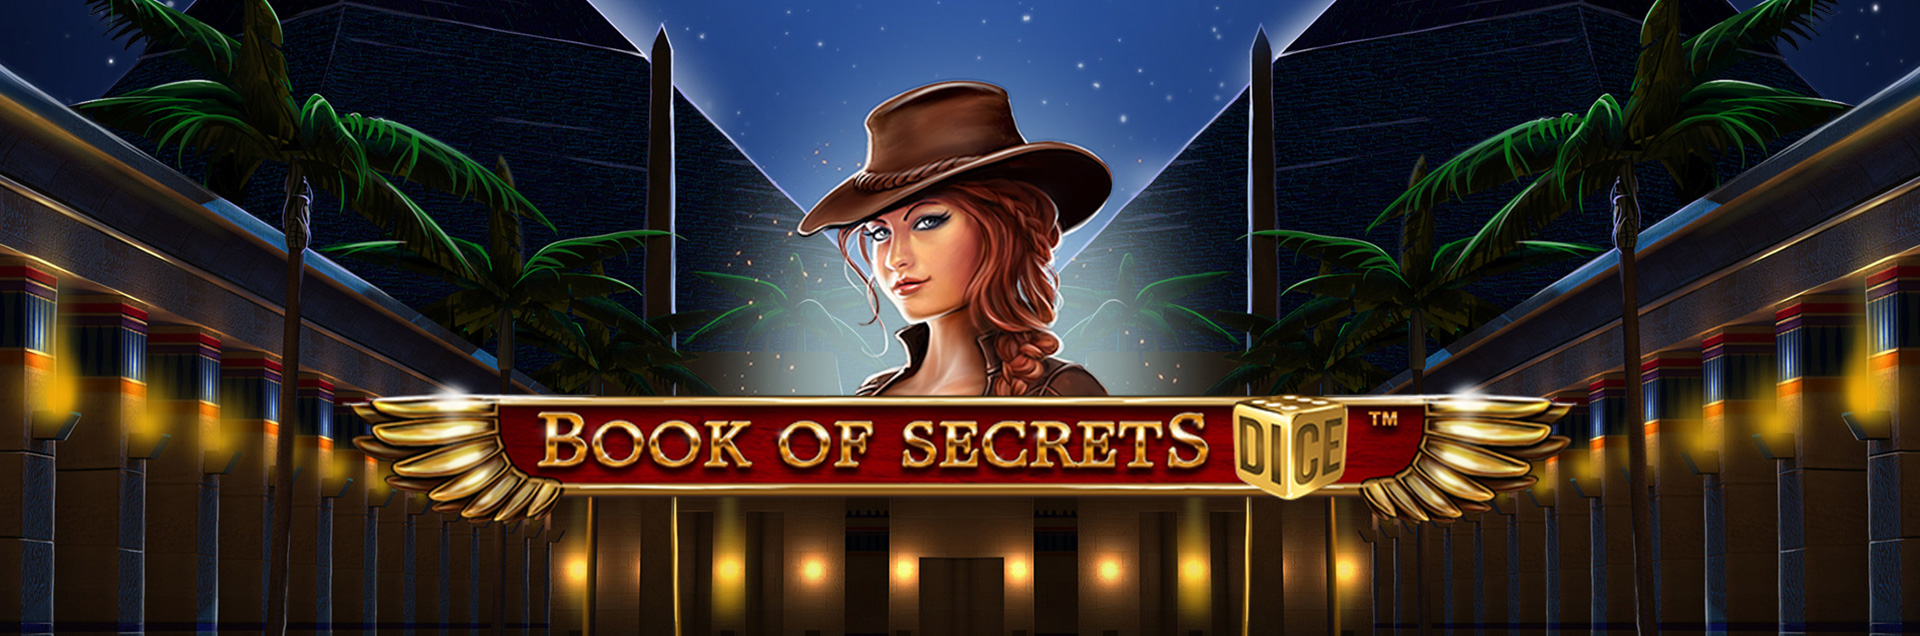 Book of Secrets Dice header games final